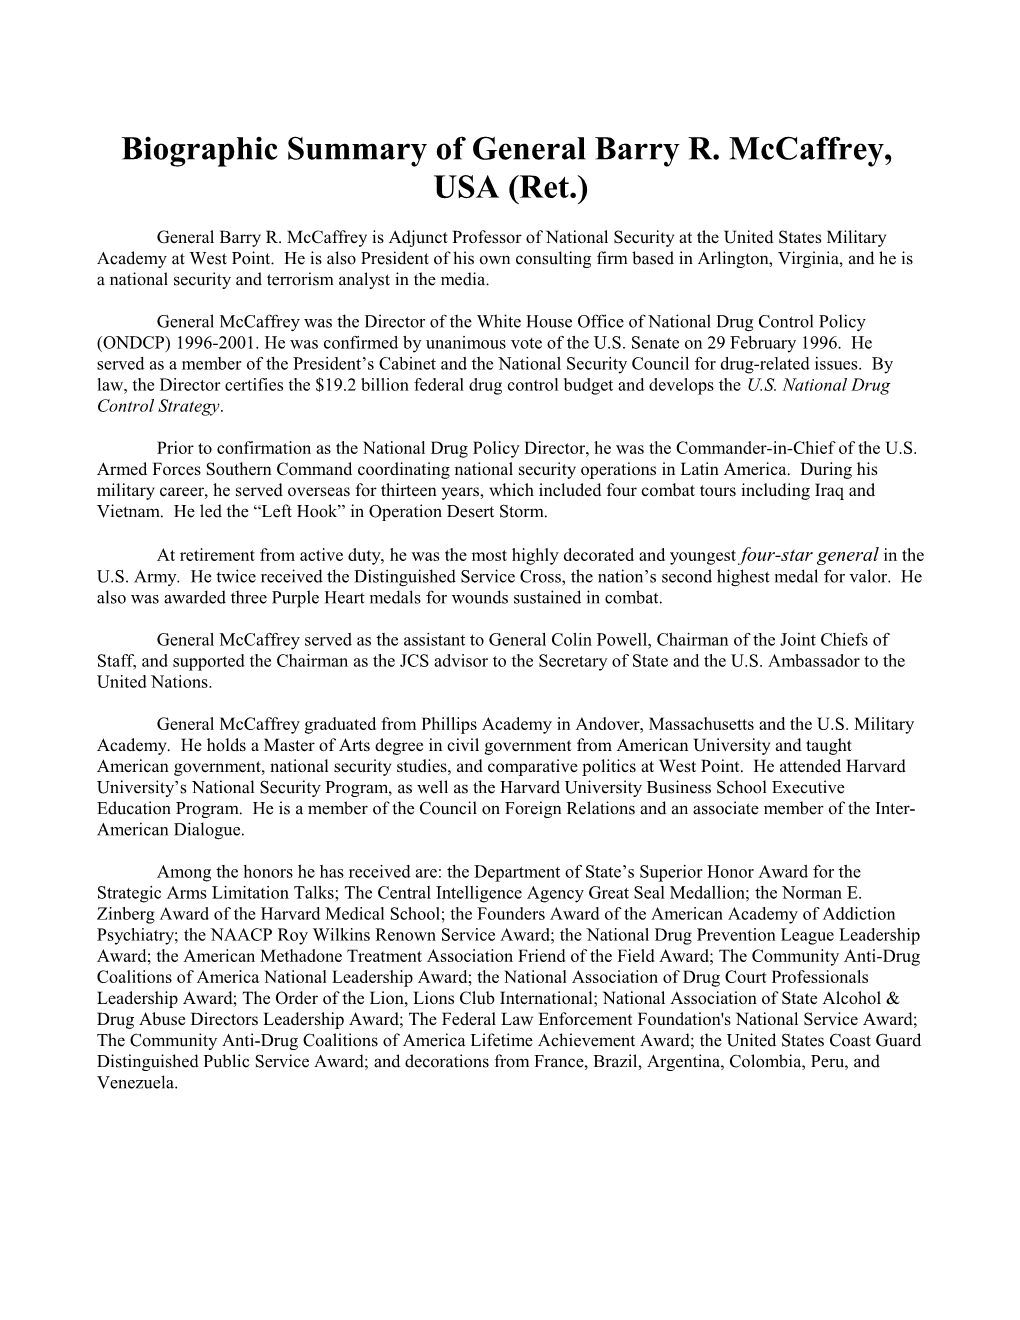 Biography of Barry R. Mccaffrey